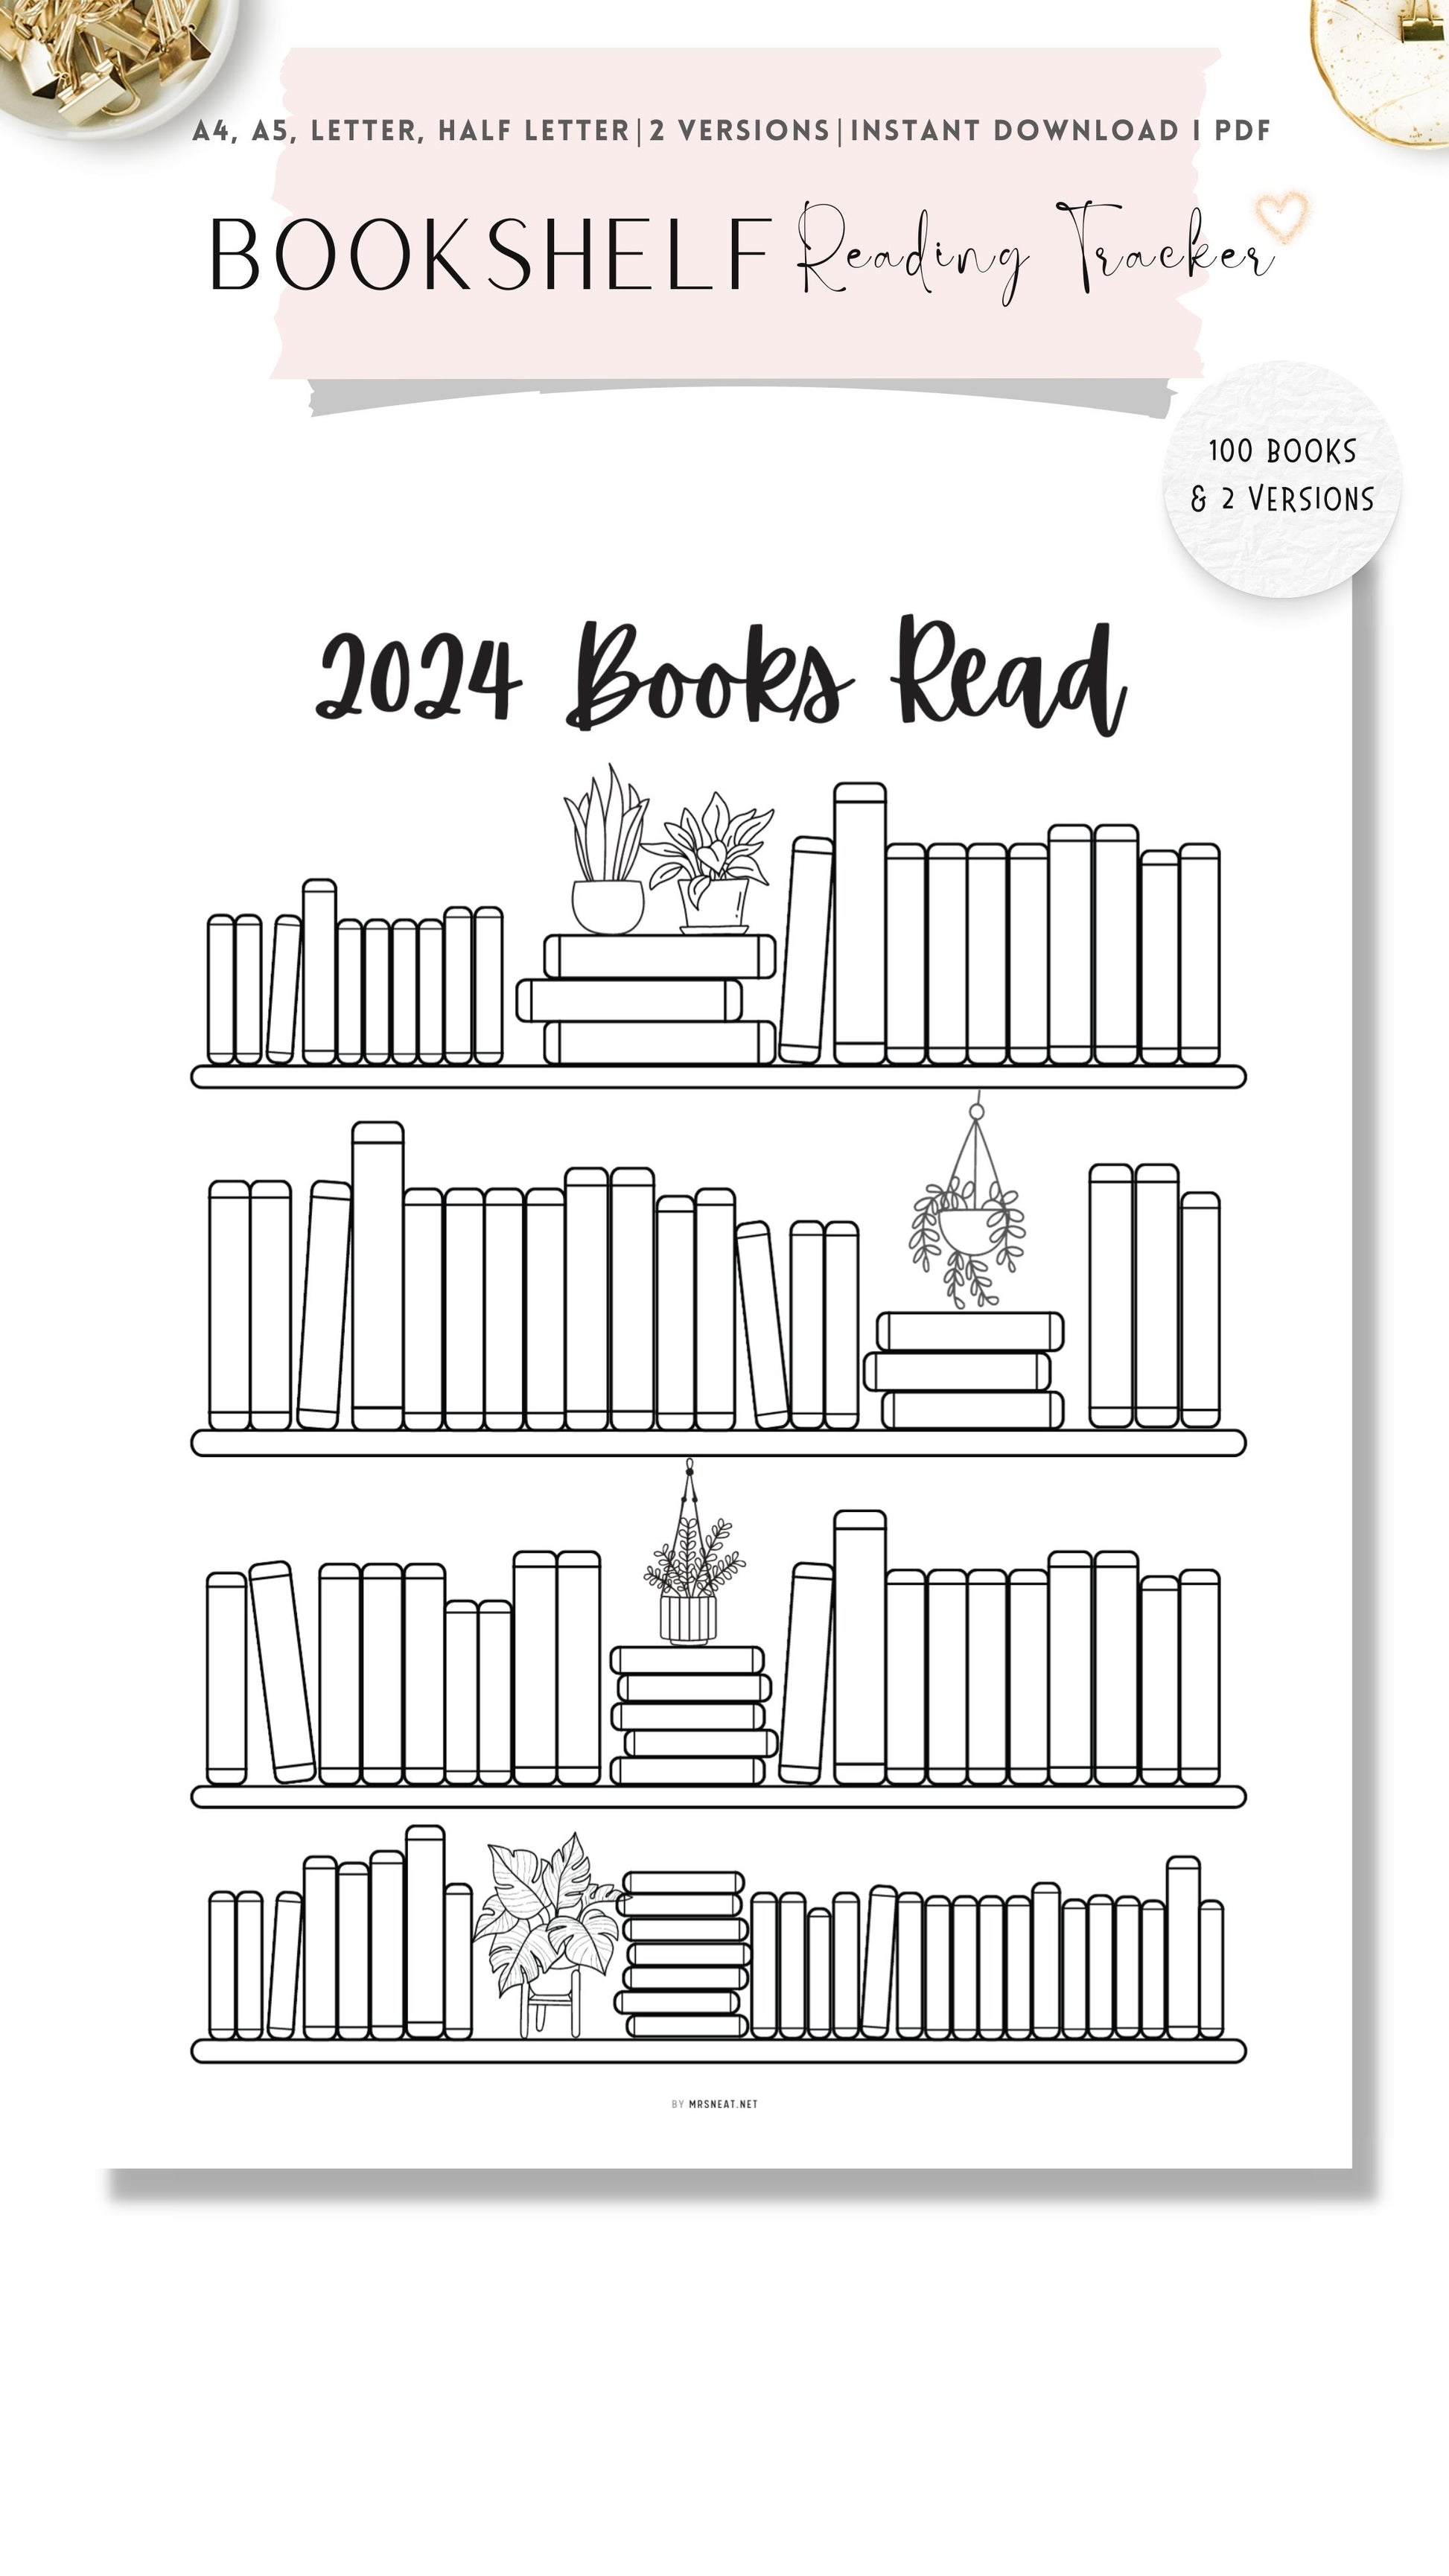 Minimalist Bookshelf Reading Tracker Printable - 100 Books